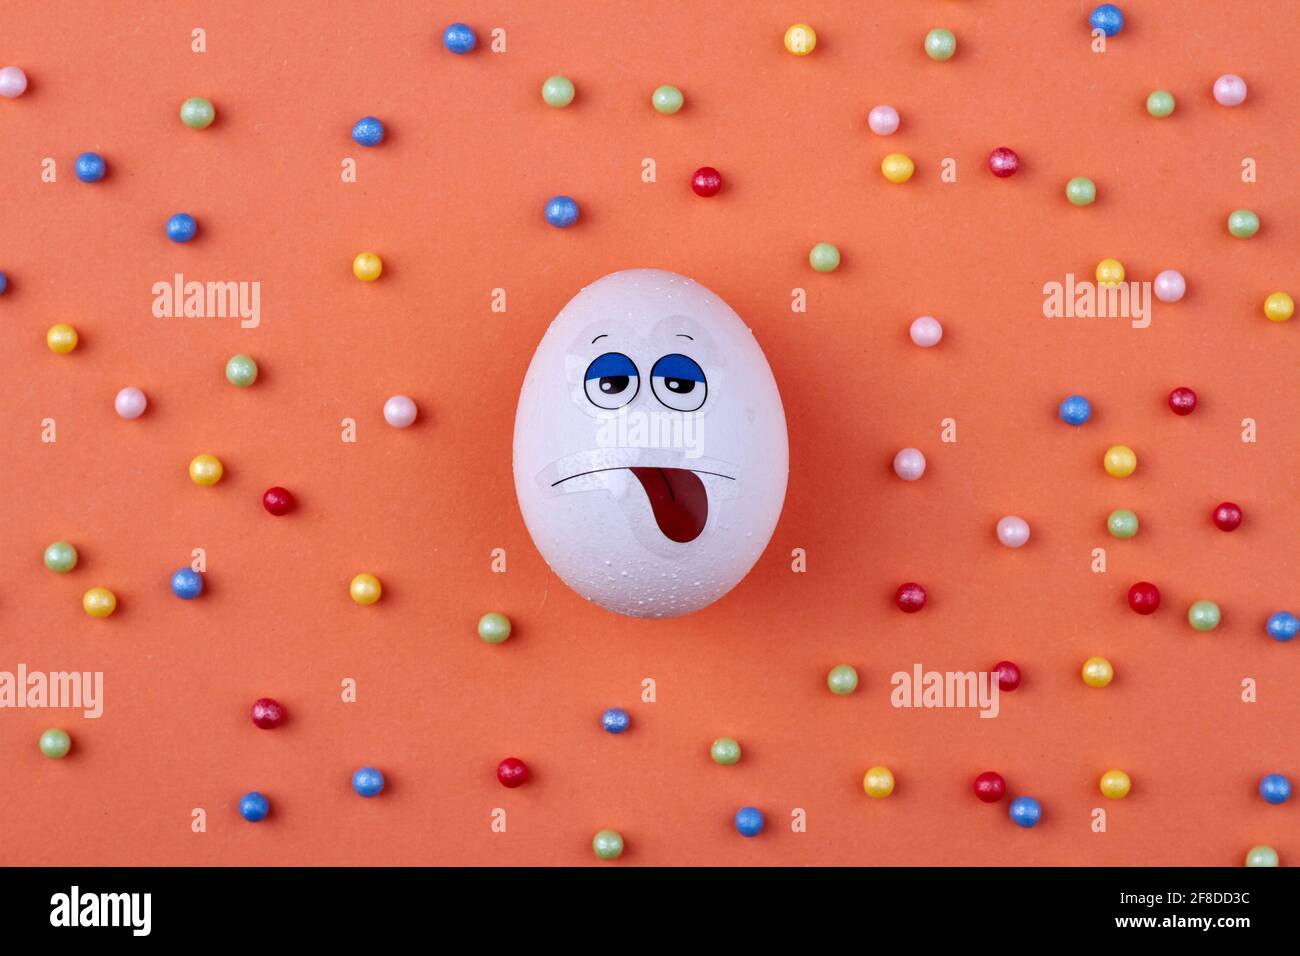 White egg with sad face. Stock Photo